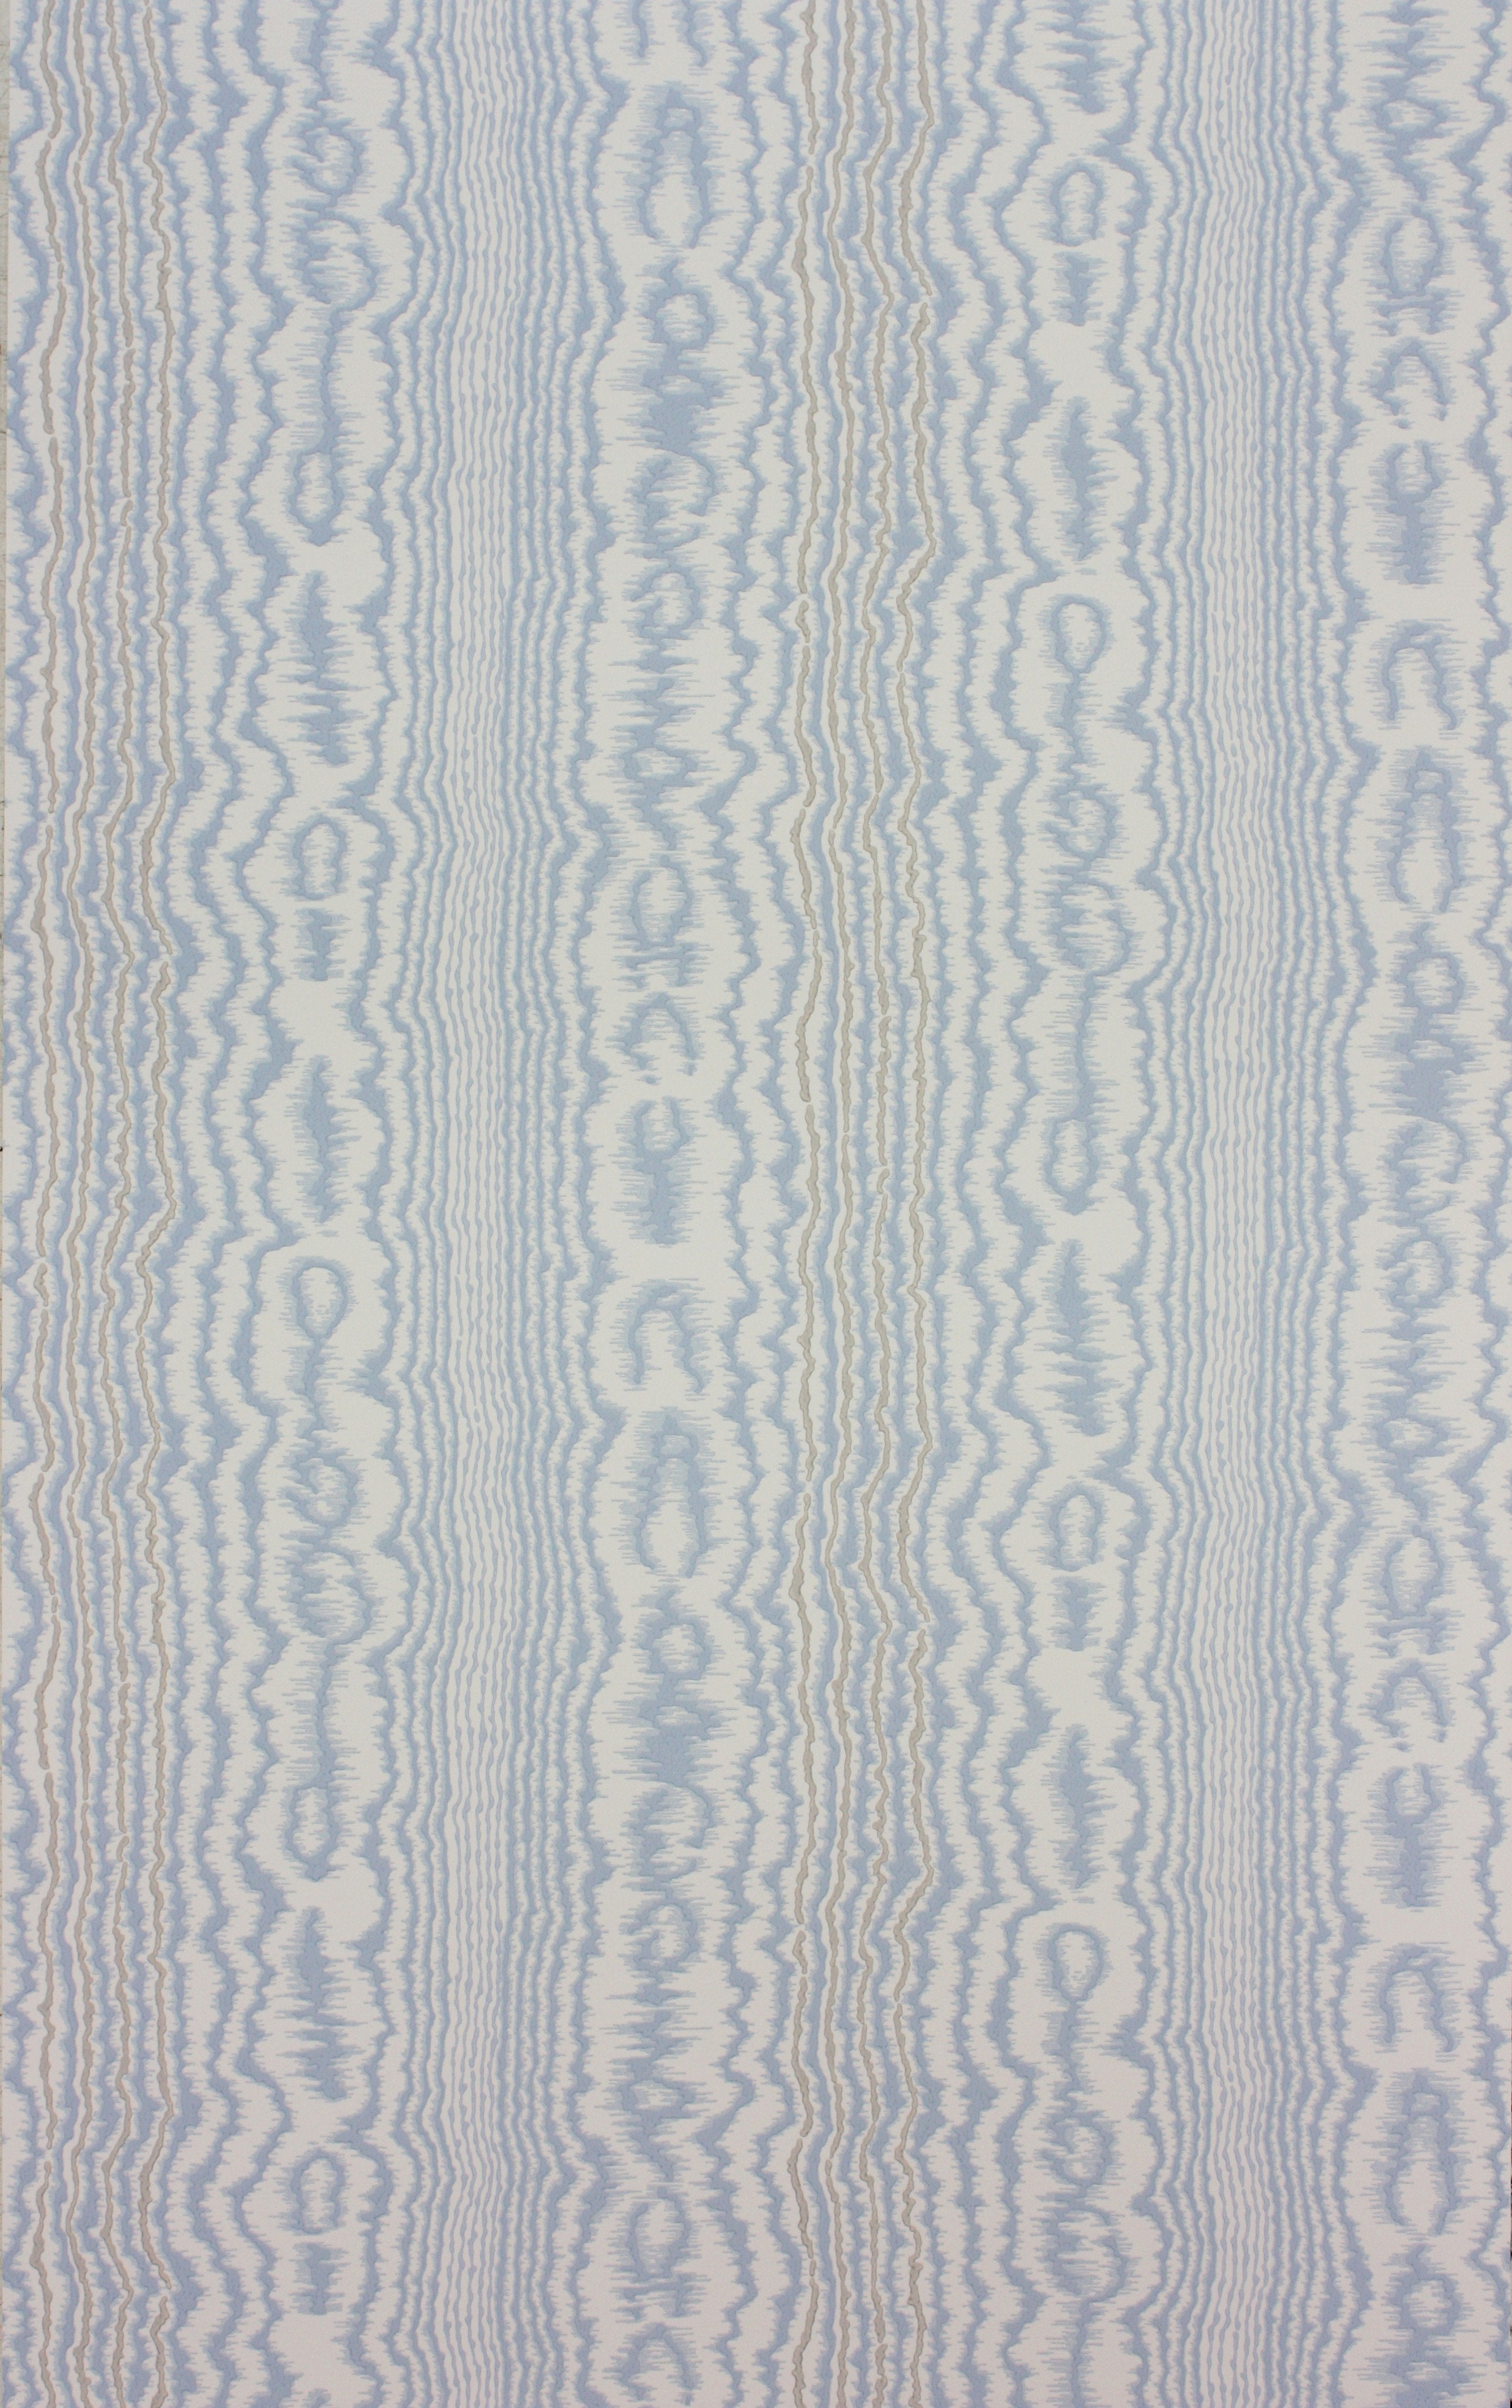 Nina Campbell Wallpaper - Fontibre Tagus Blue/Ivory NCW4206-04